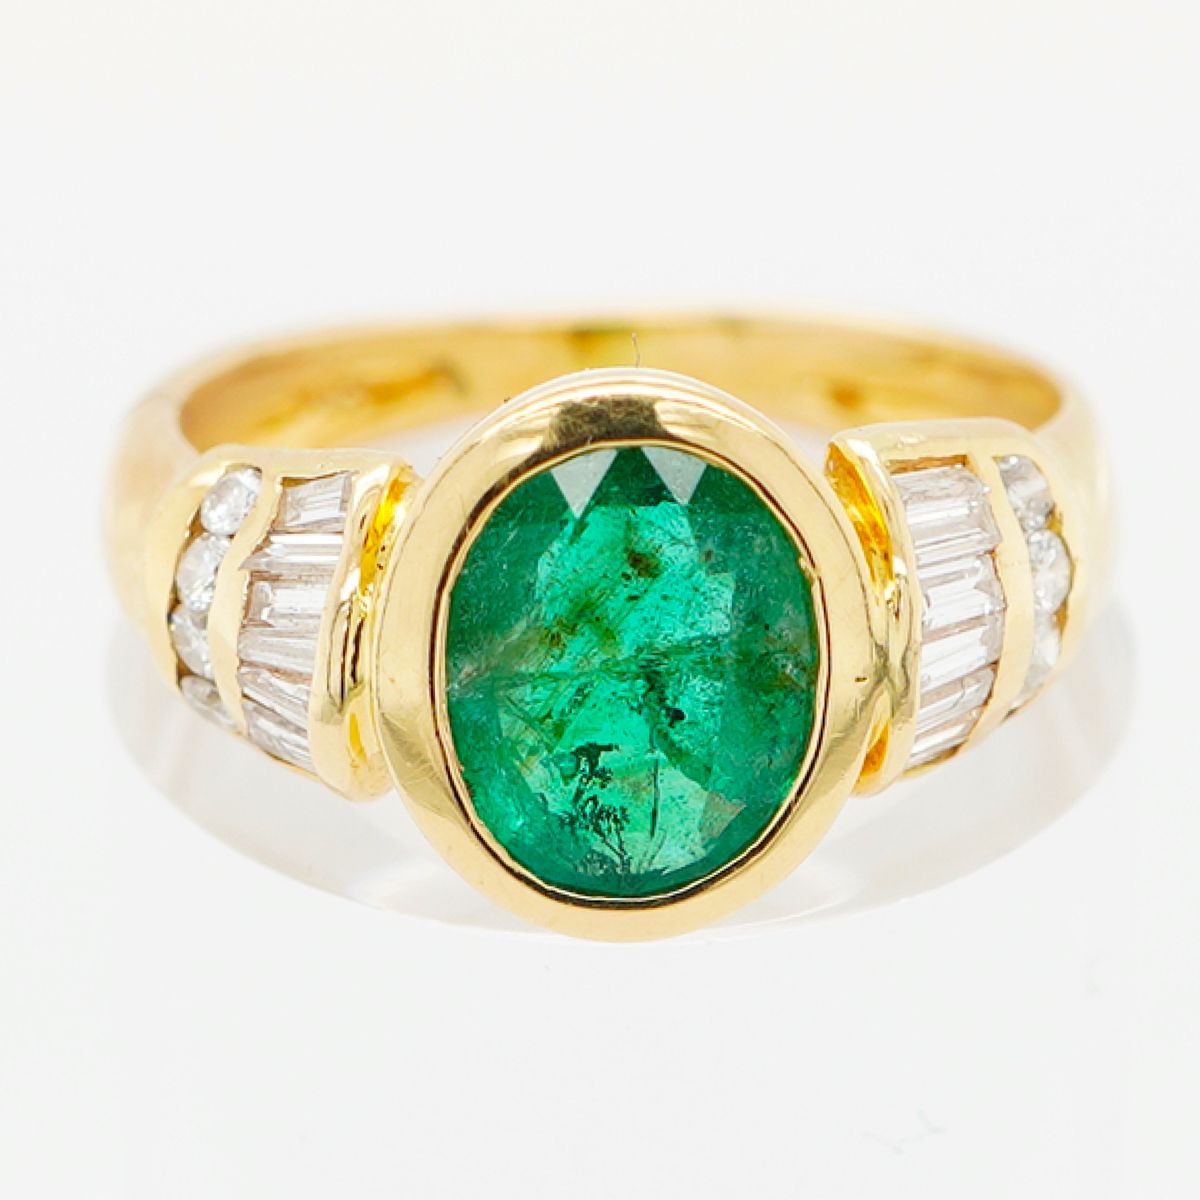 Null 祖母绿和钻石戒指，GG 750，切面为椭圆形祖母绿，肩部为长方形钻石，钻石为8/8切割，盖章，重量：4.2克，长53.5厘米。限制432,-。